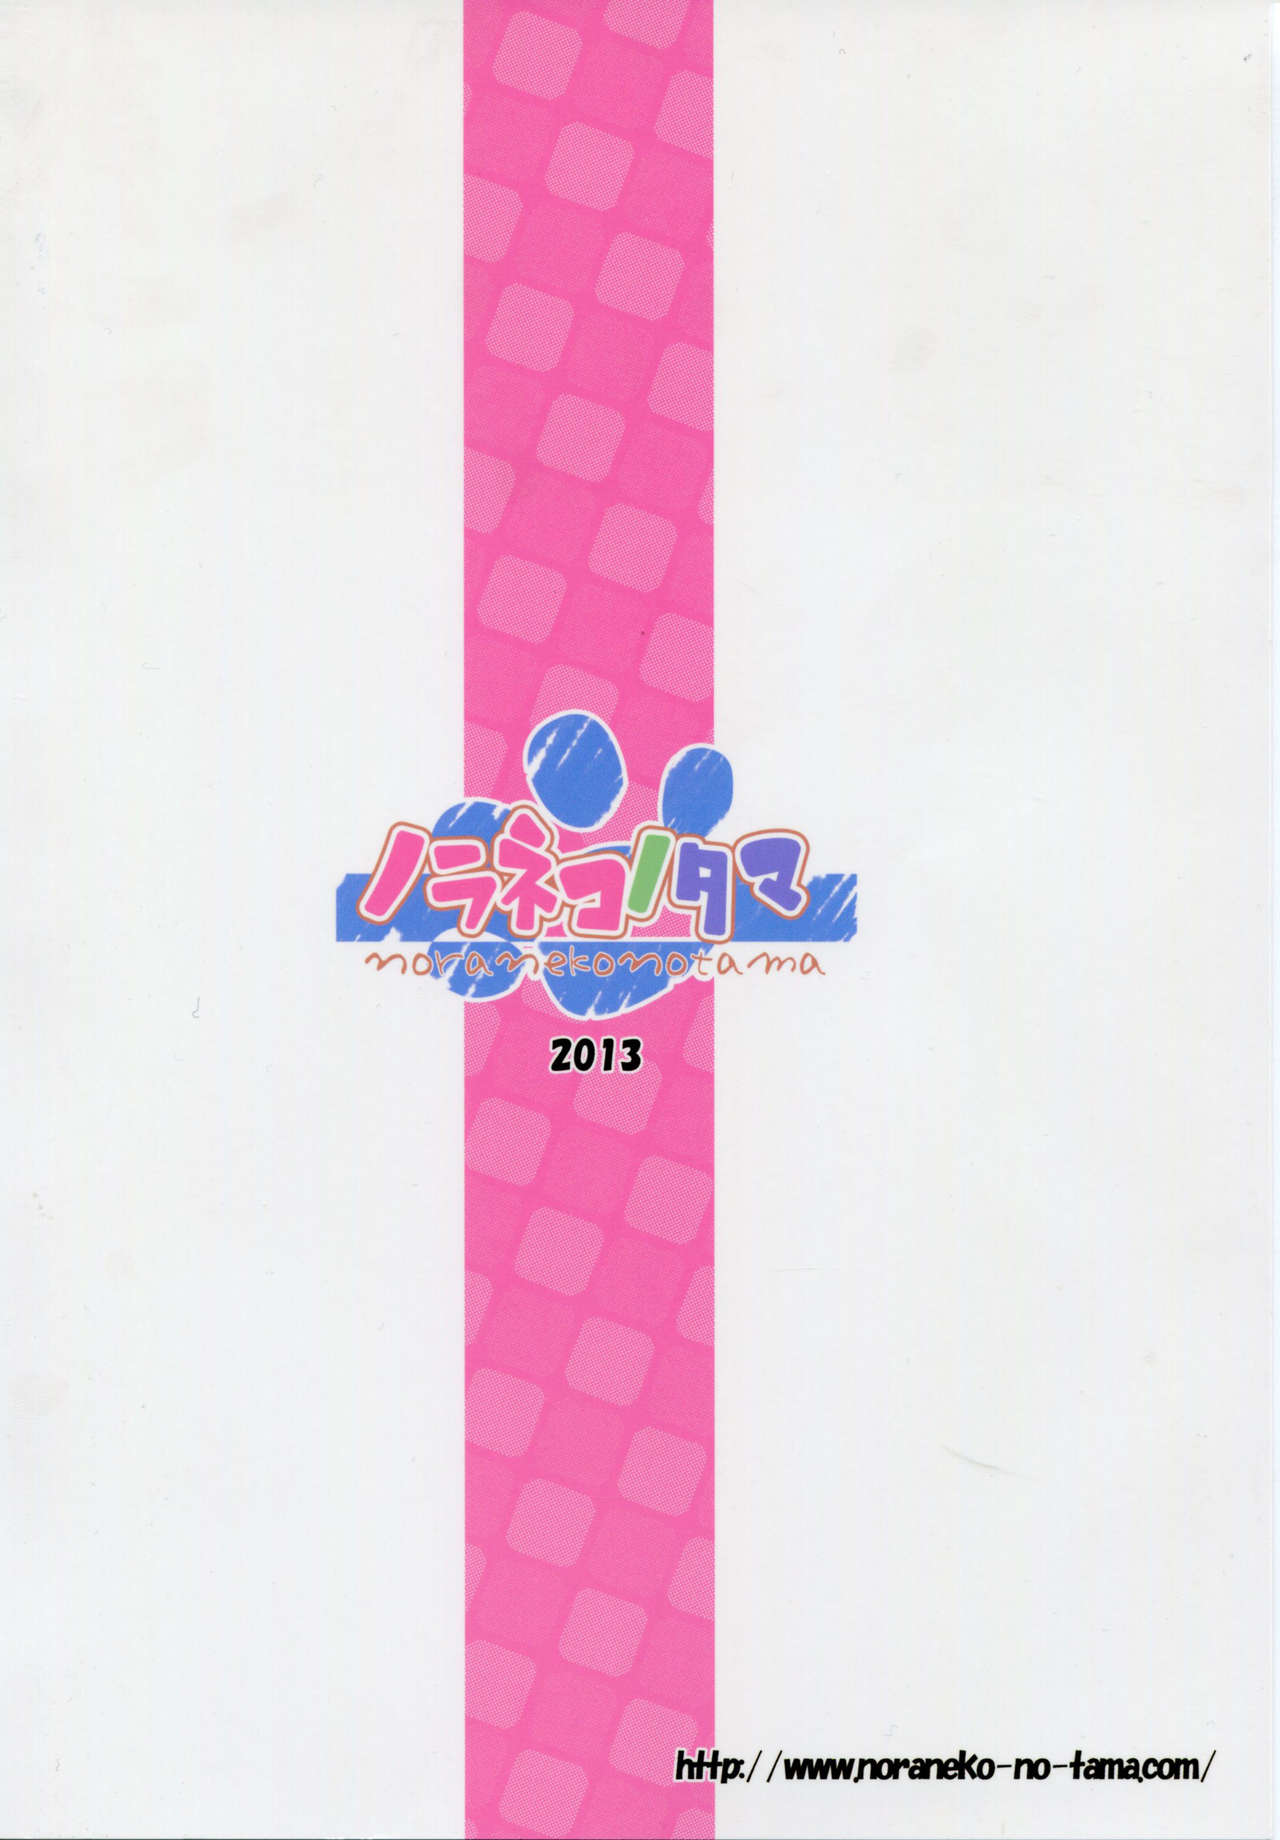 Monokemono Roku-ya numero d'image 26